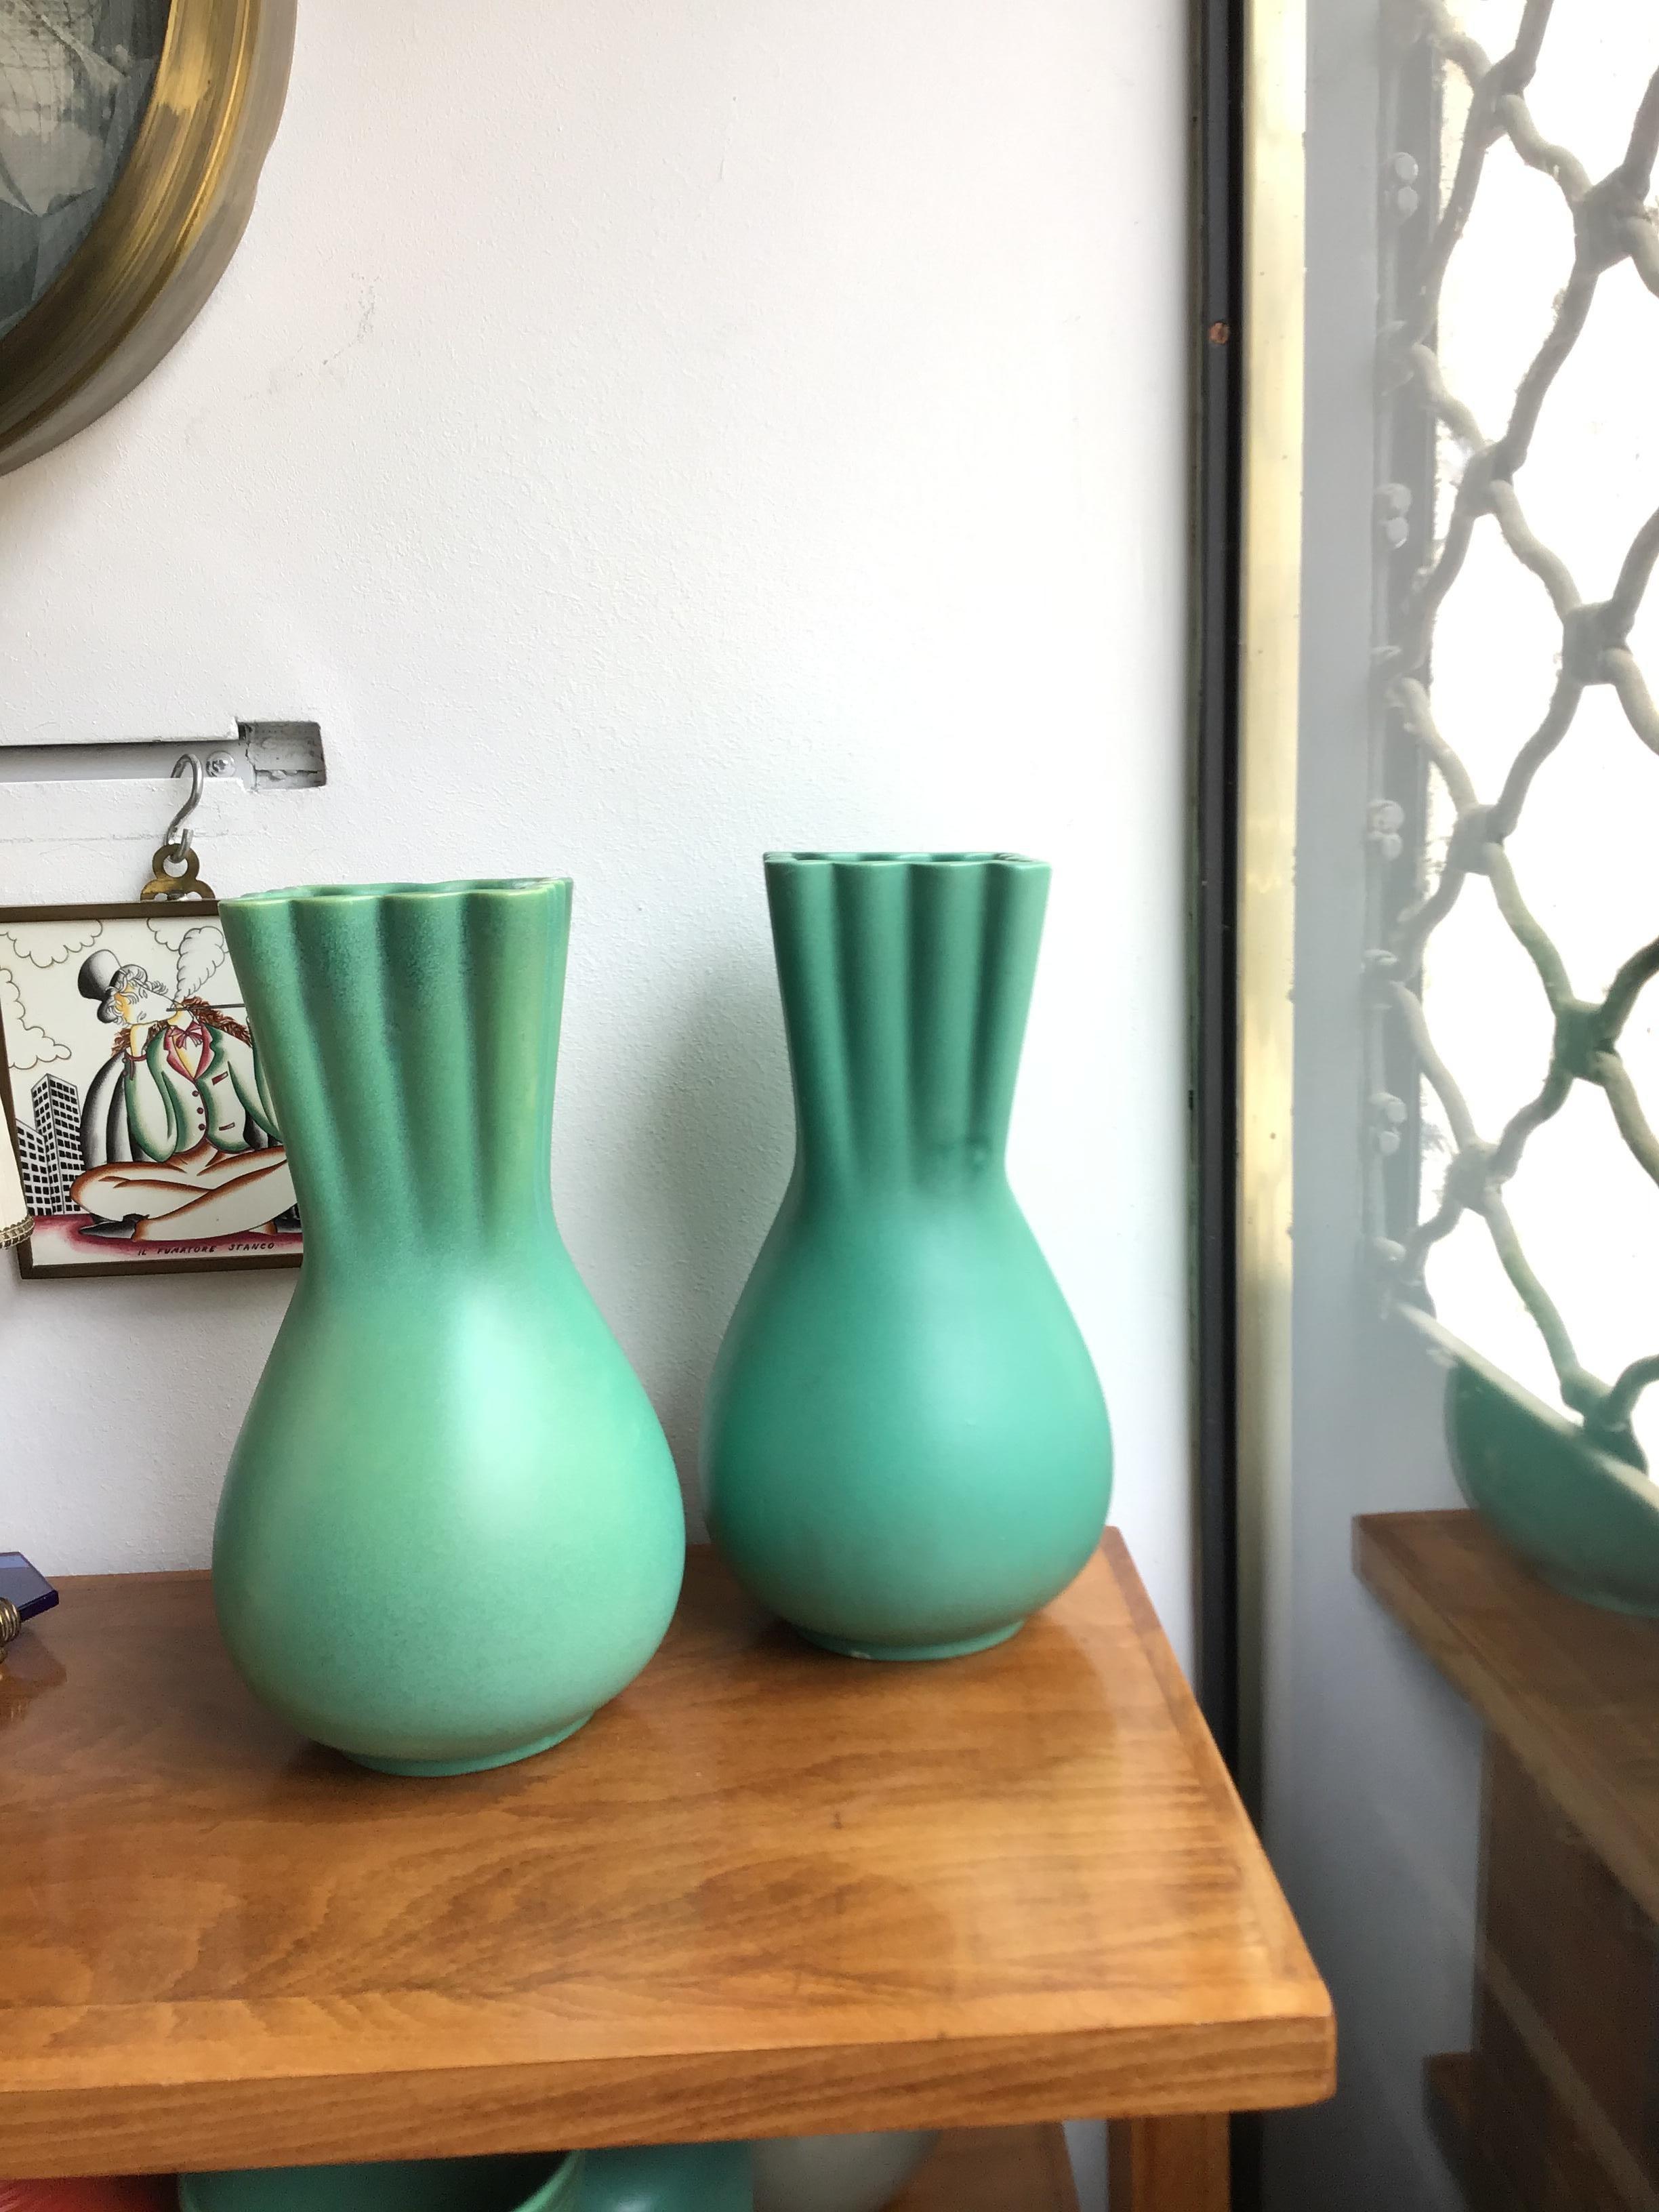 Richard Ginori Giovanni Gariboldi Green Vase Ceramic, 1950, Italy In Excellent Condition For Sale In Milano, IT